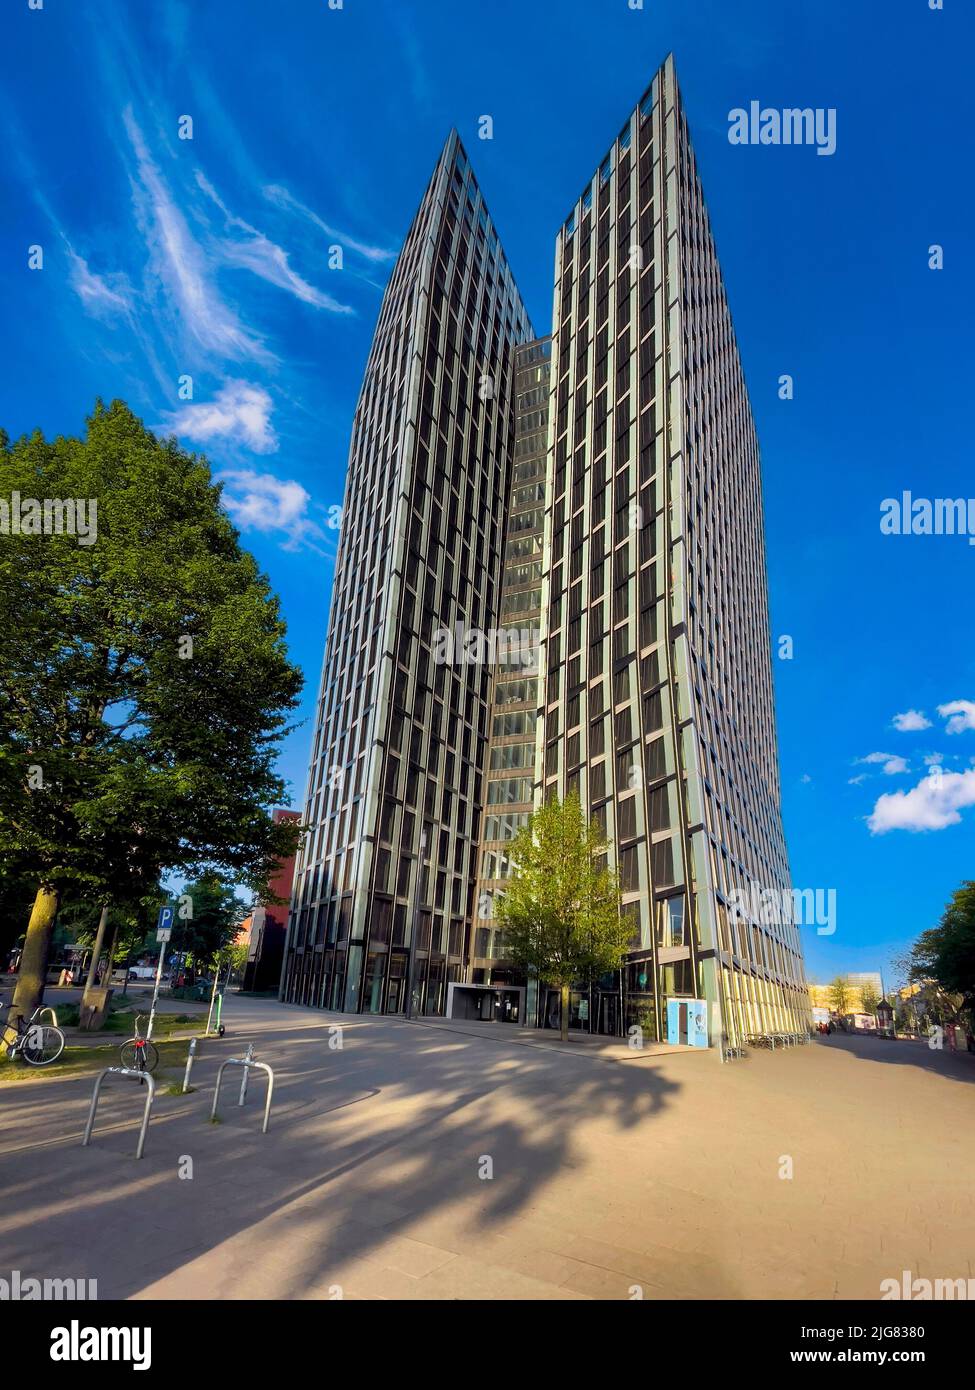 Dancing Towers, Reeperbahn, Hamburg, Germany, Europe Stock Photo